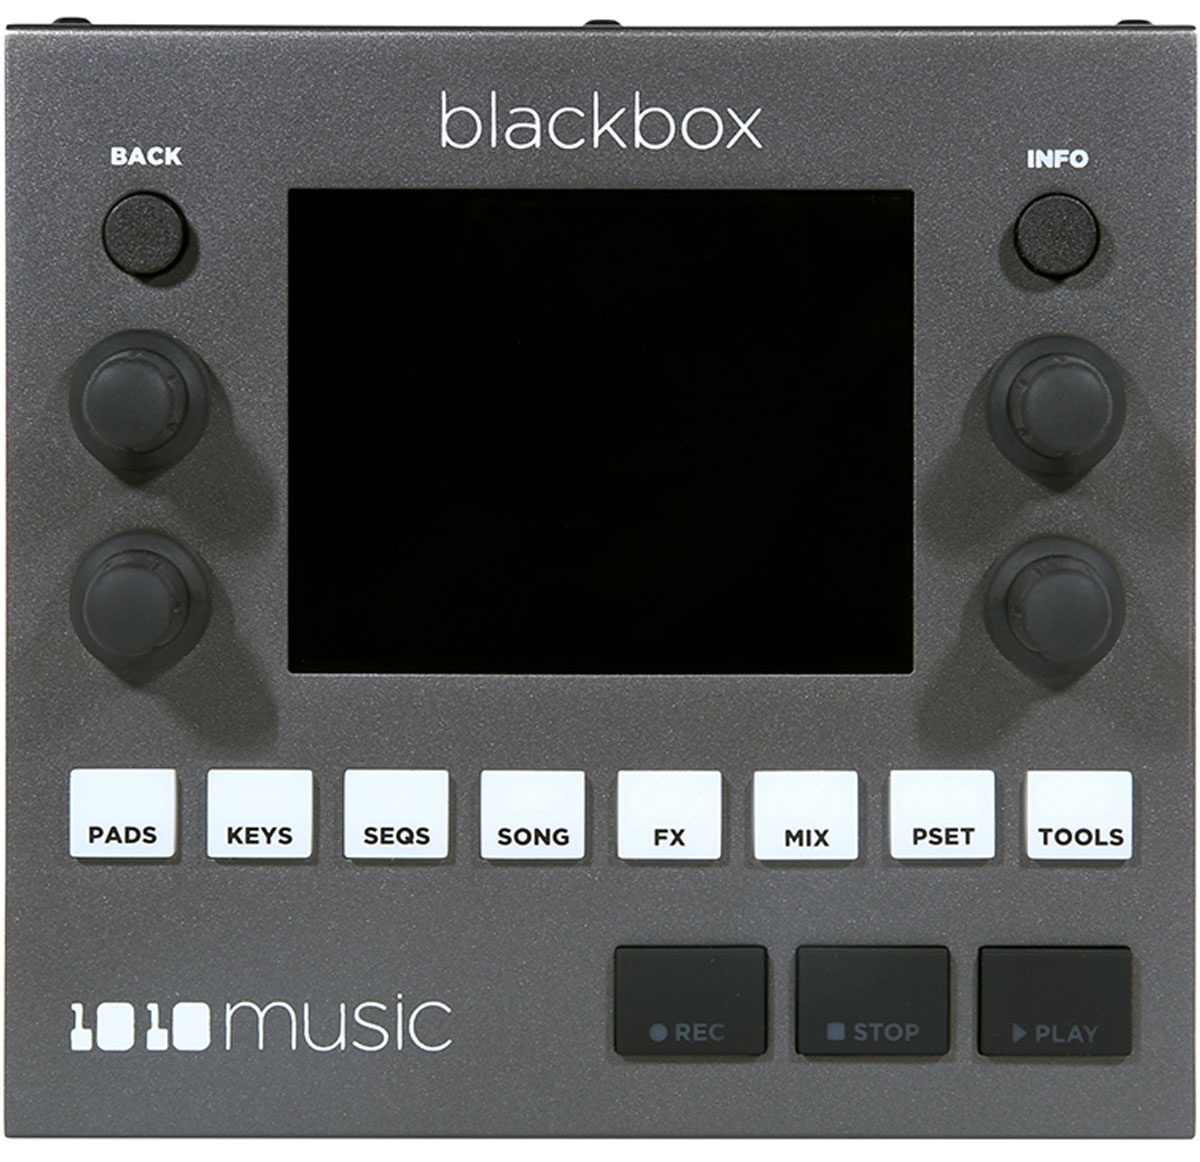 Blackbox - Compact Sampling Studio - 1010Music Llc